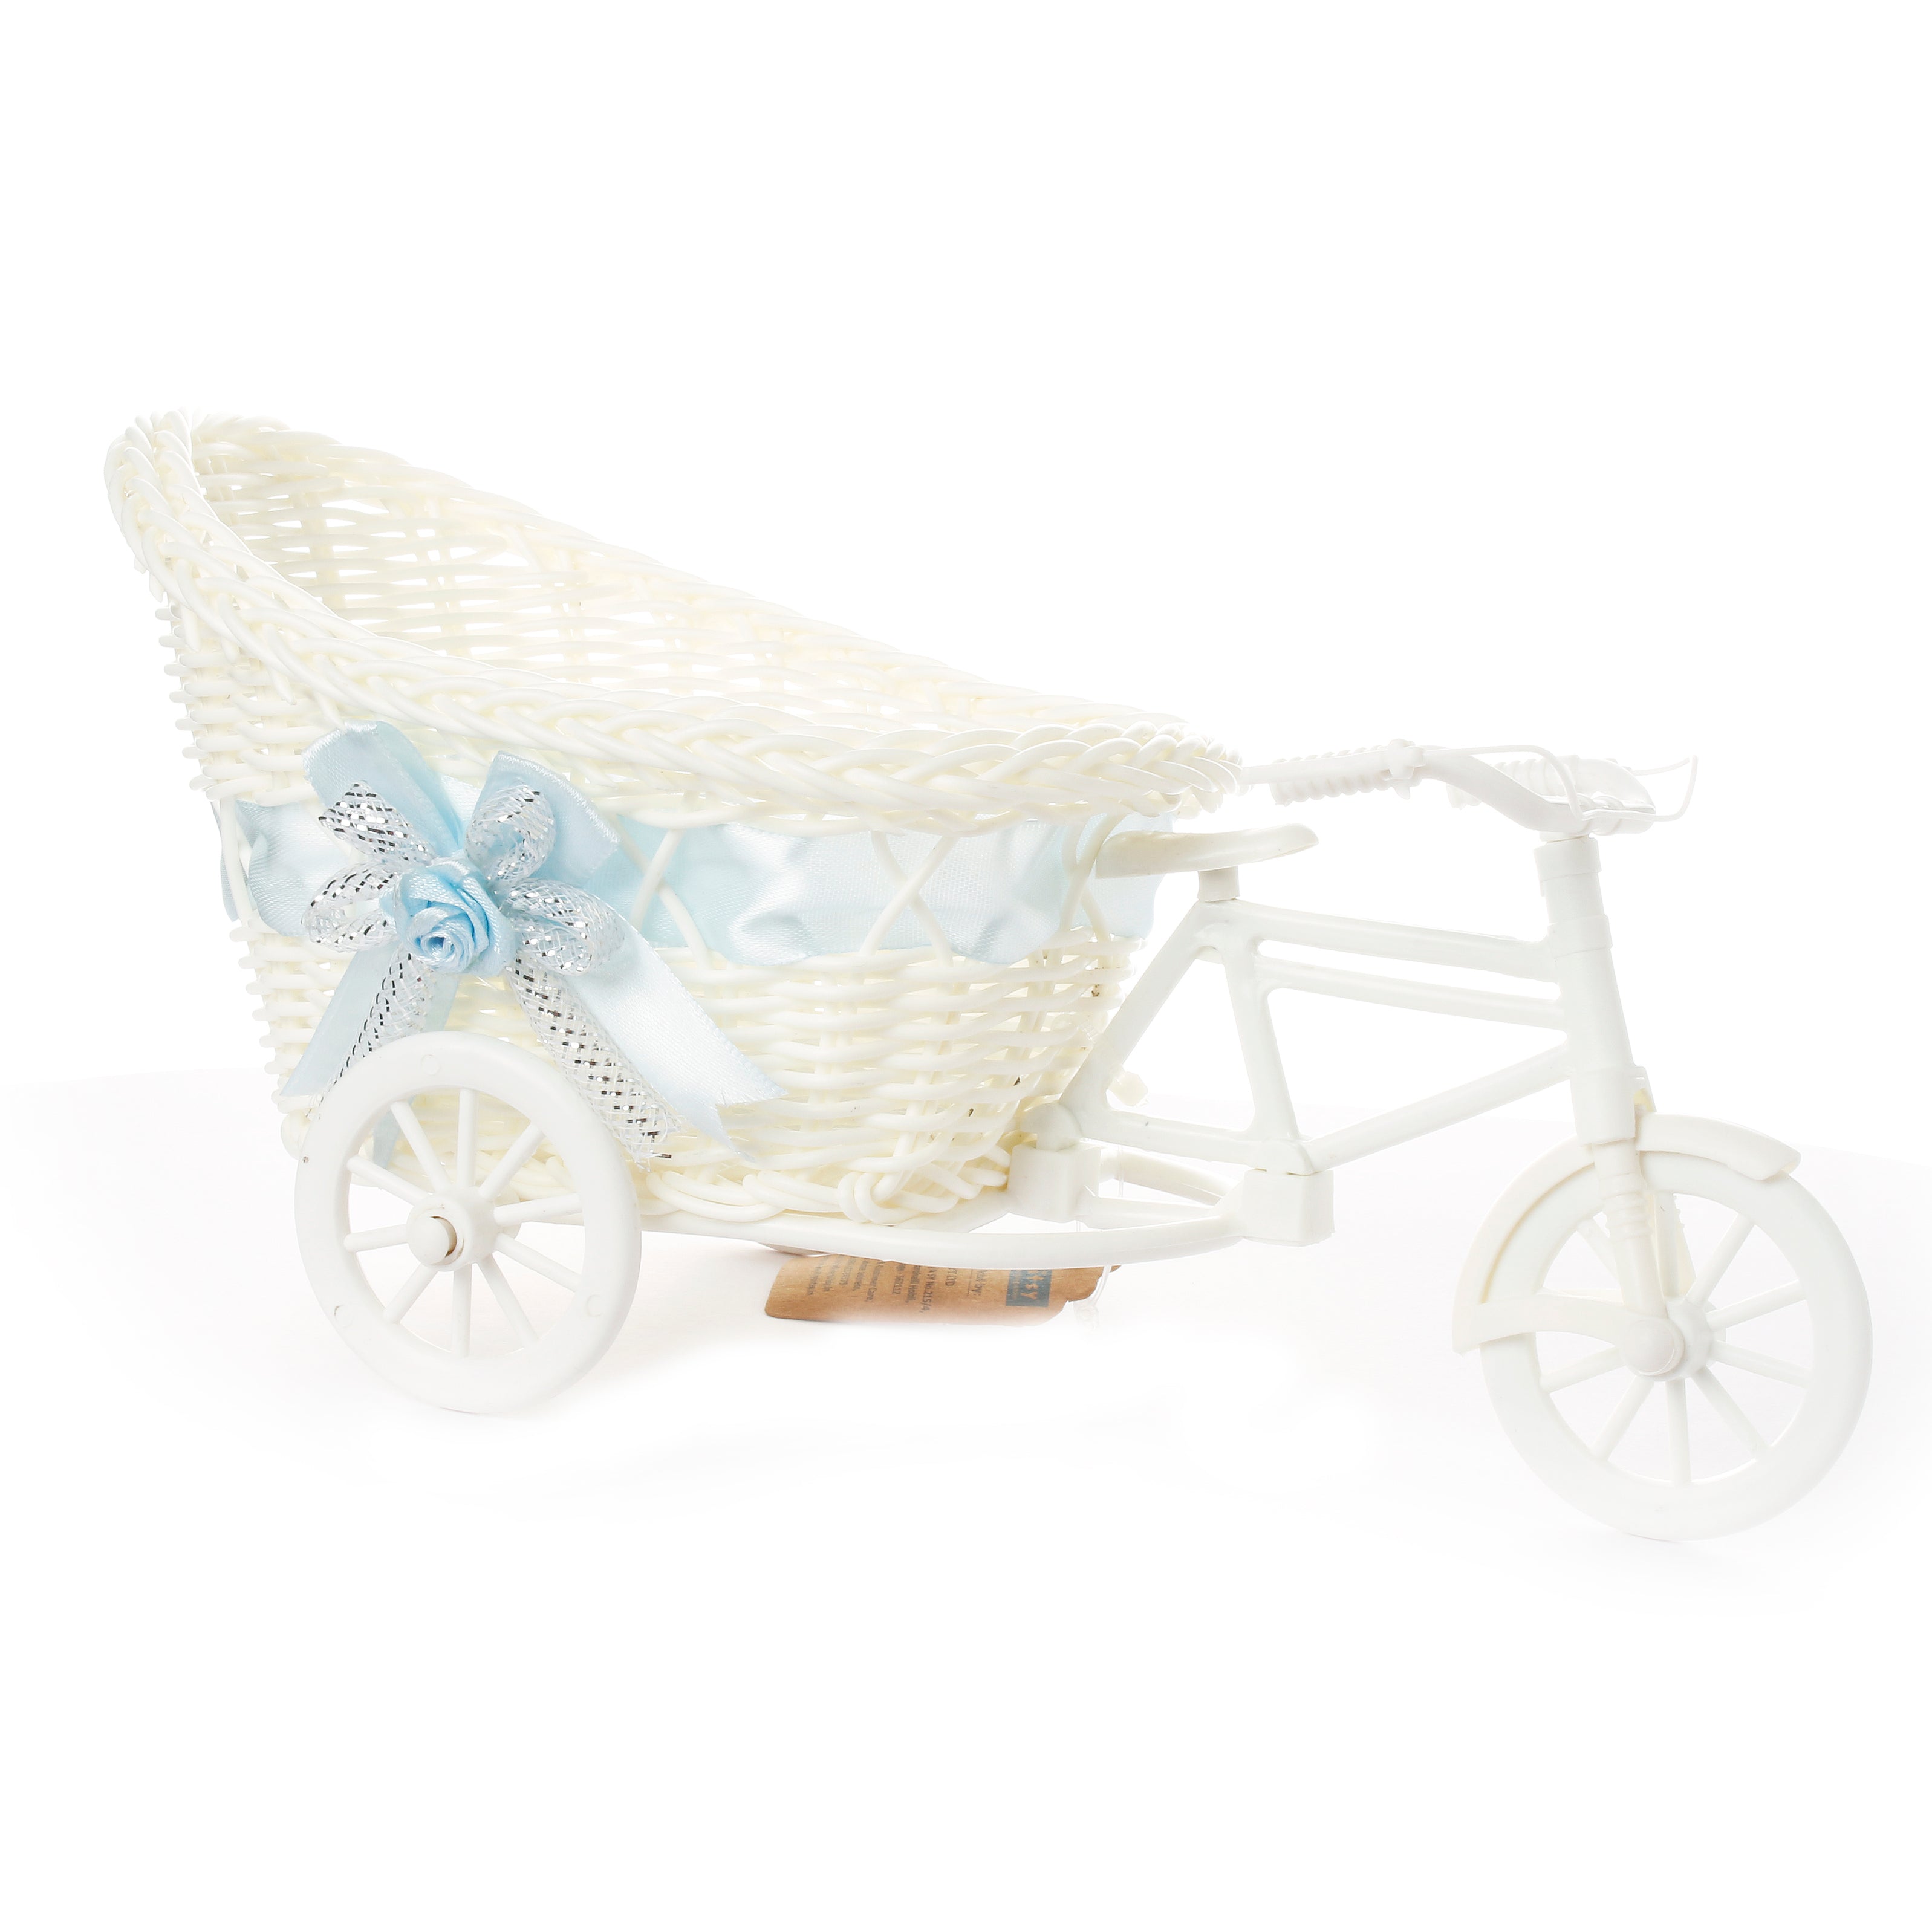 Rattan Bicycle W/Flower Basket Big Assorted Design 1pc